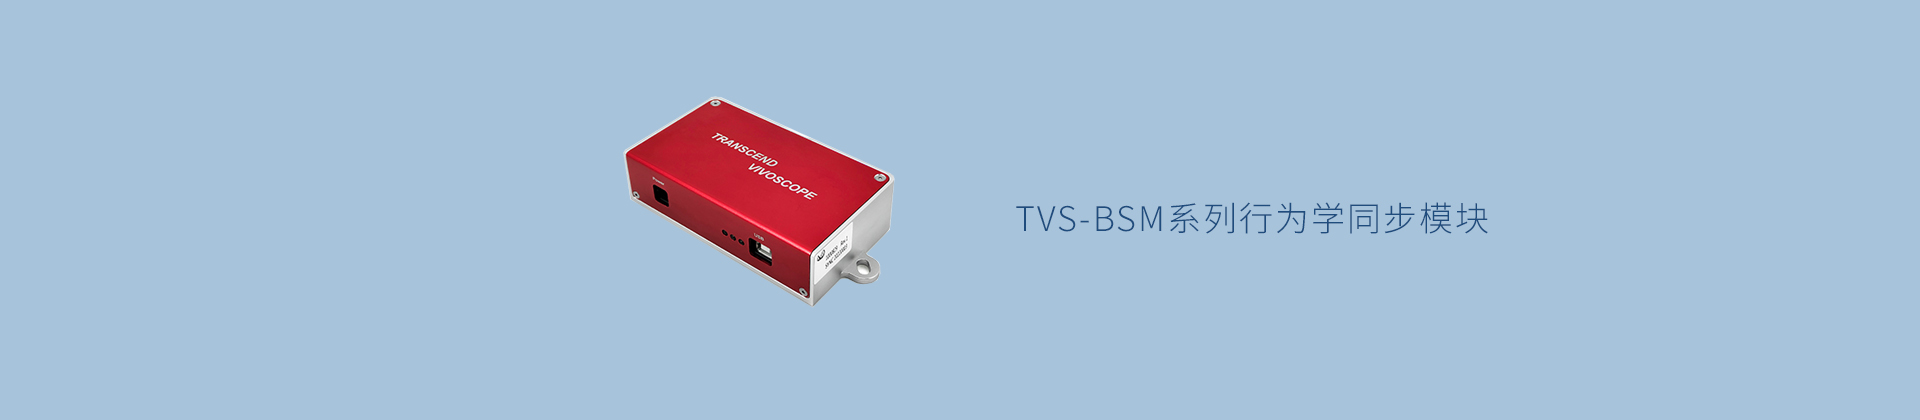 TVS-BSM系列行为学同步模块